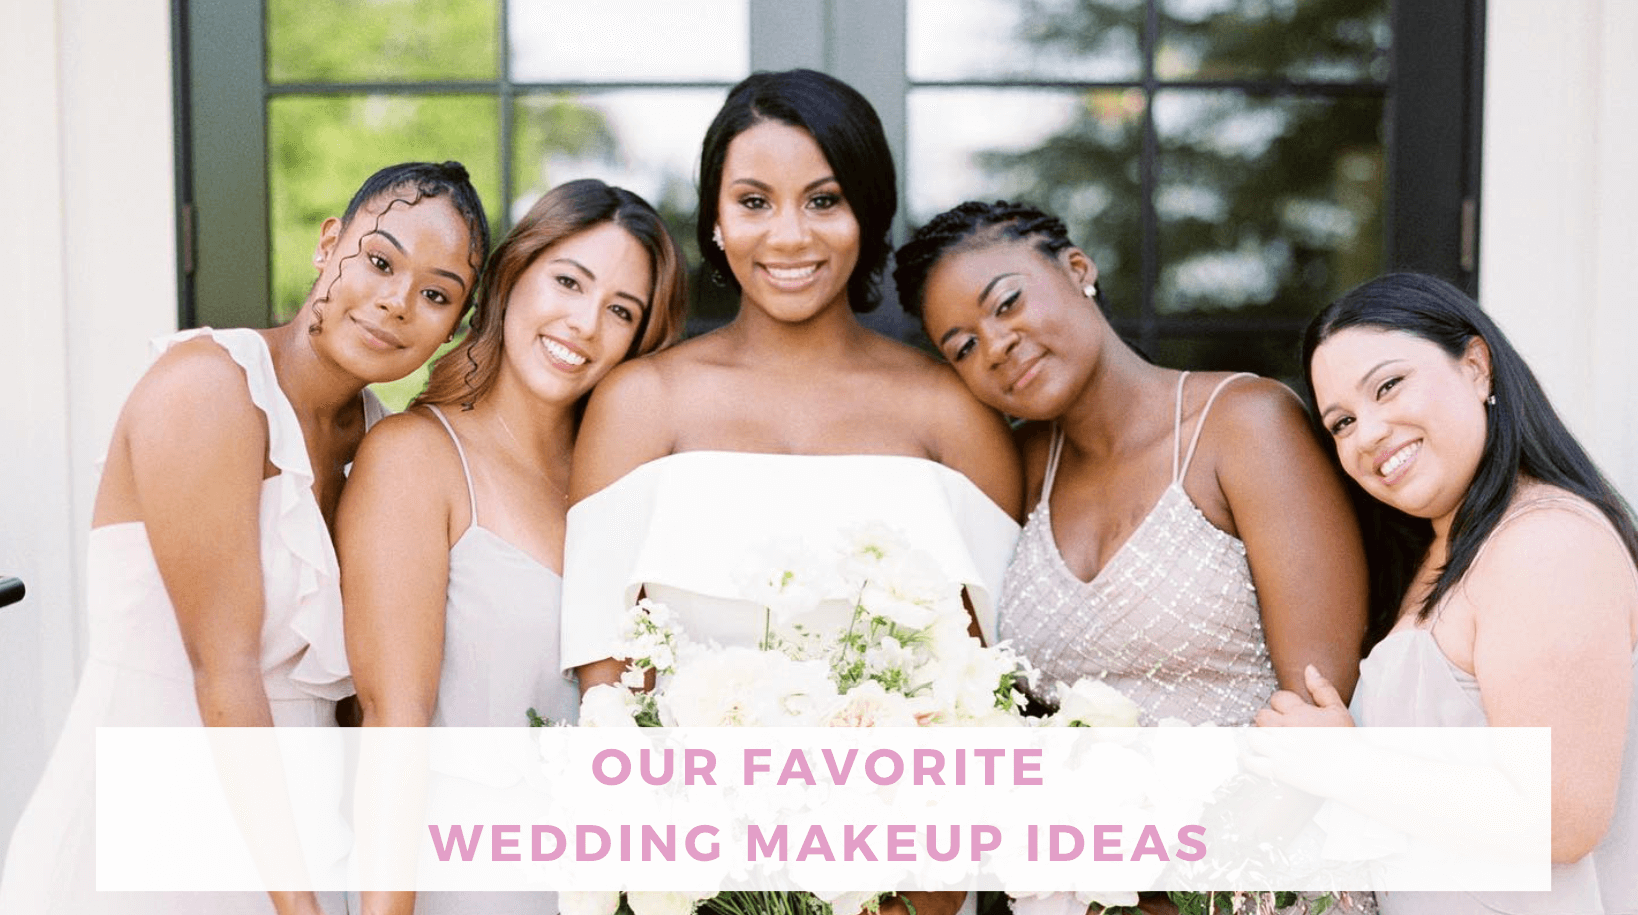 5 Wedding Makeup Ideas To Help You Get